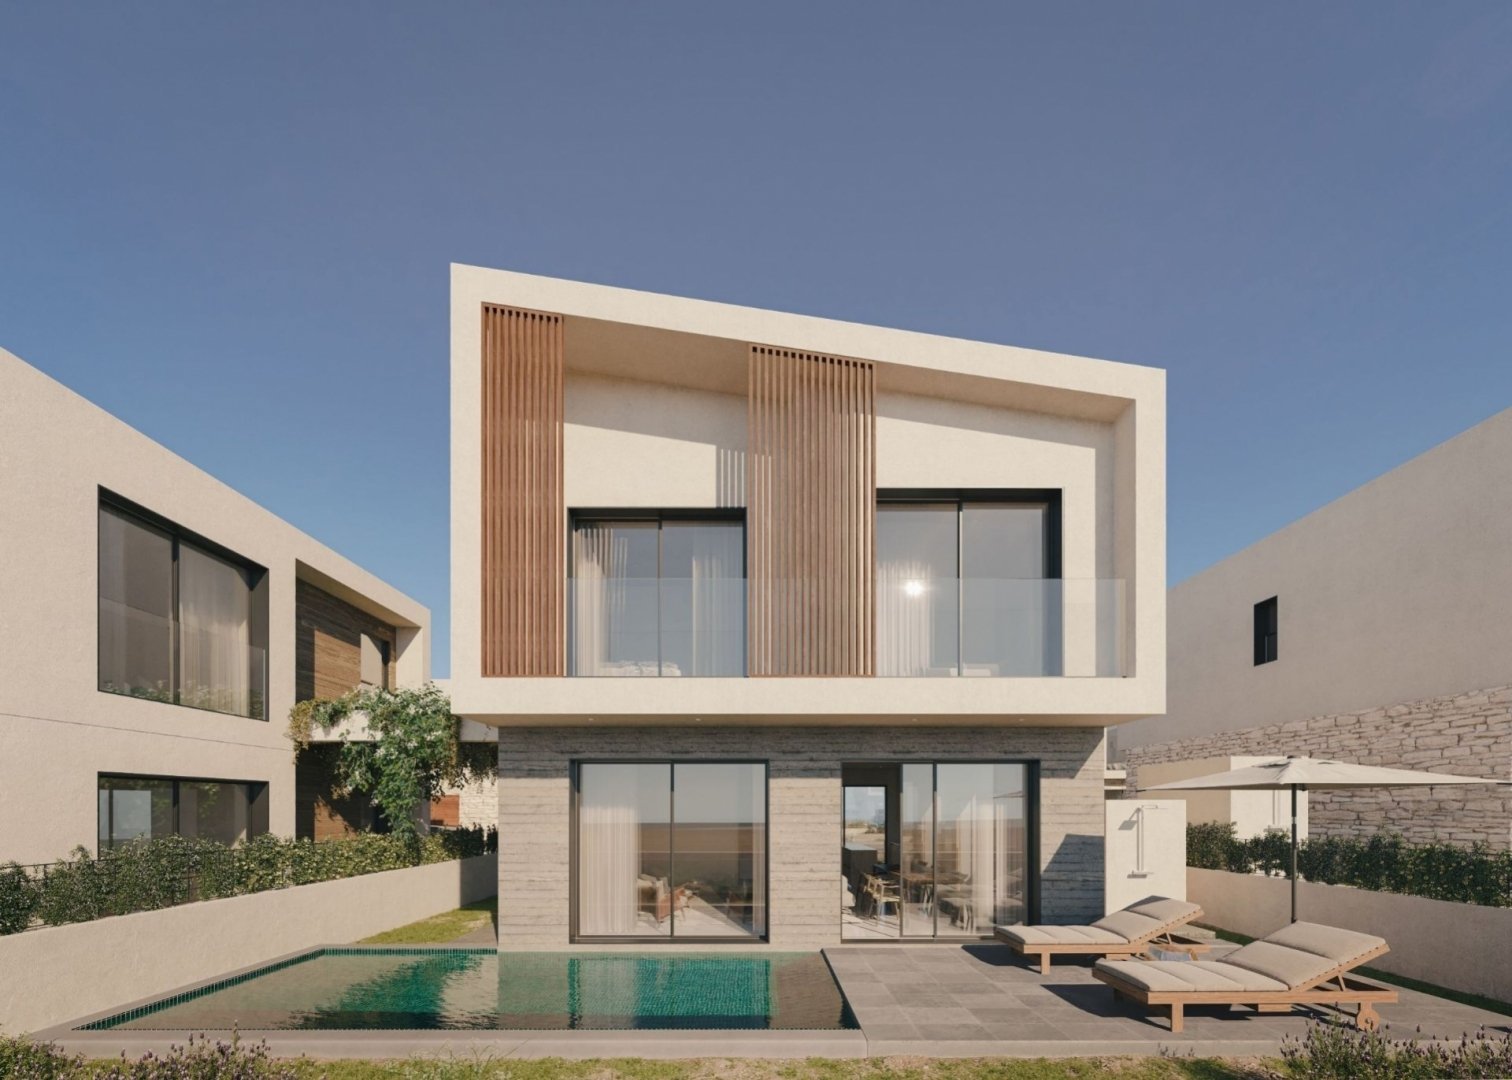 3 Bedroom Villa for Sale in Empa, Paphos District